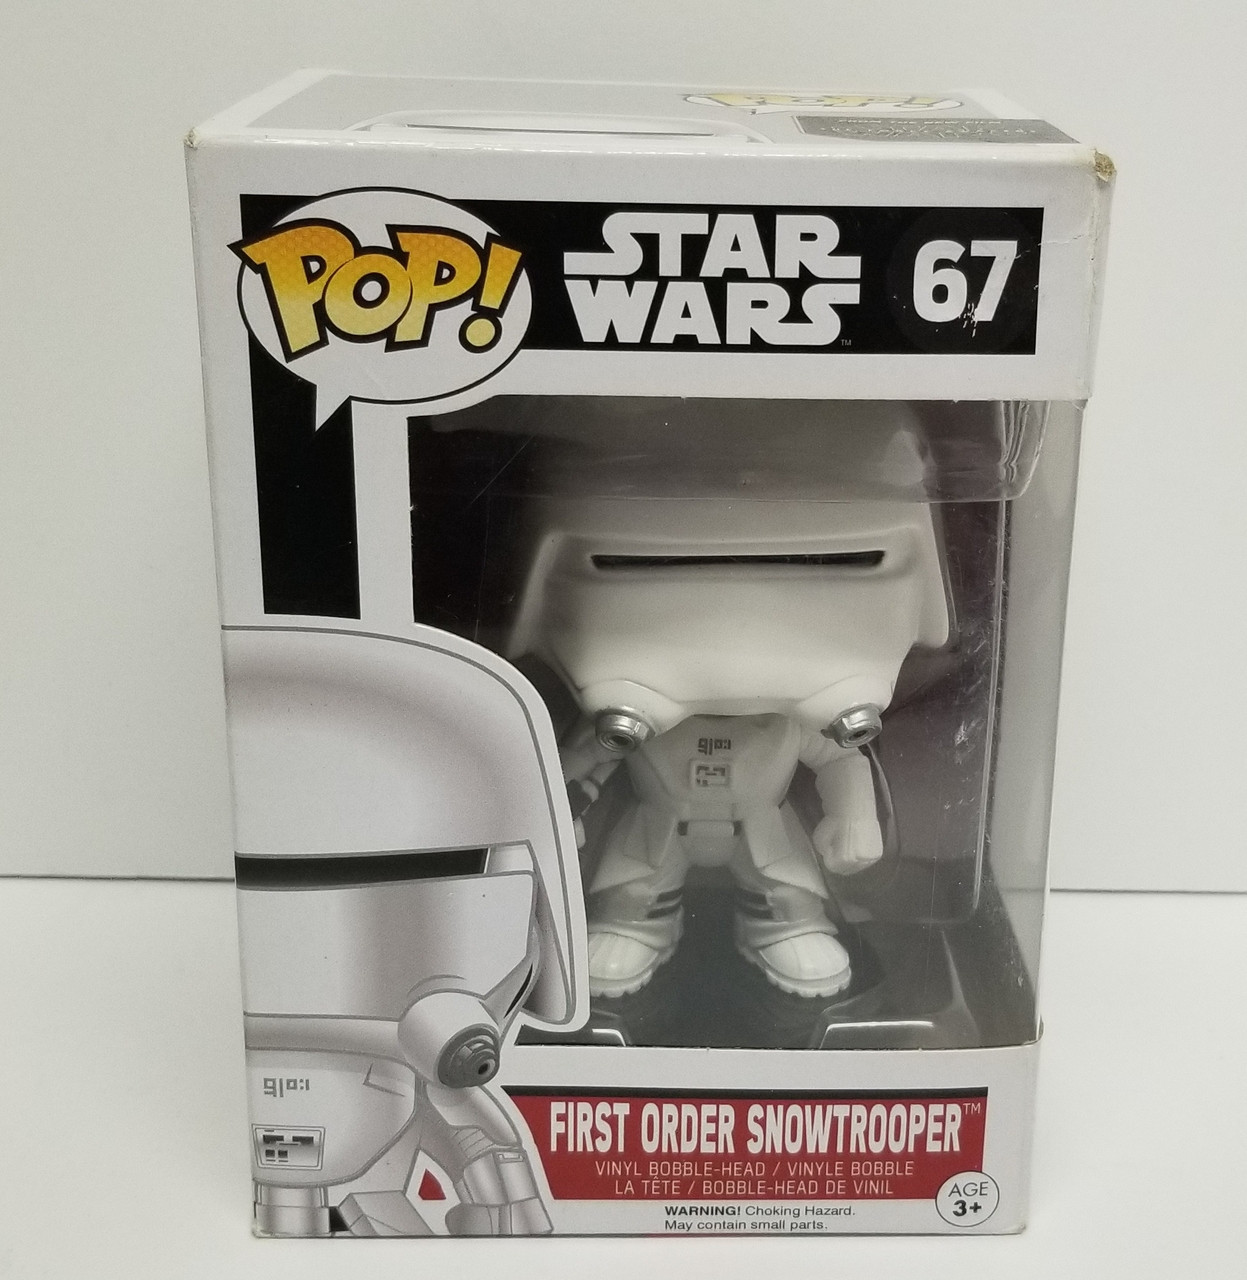 First Order Snowtrooper Vinyl Bobble-Head Funko Funko Pop Star Wars #67 